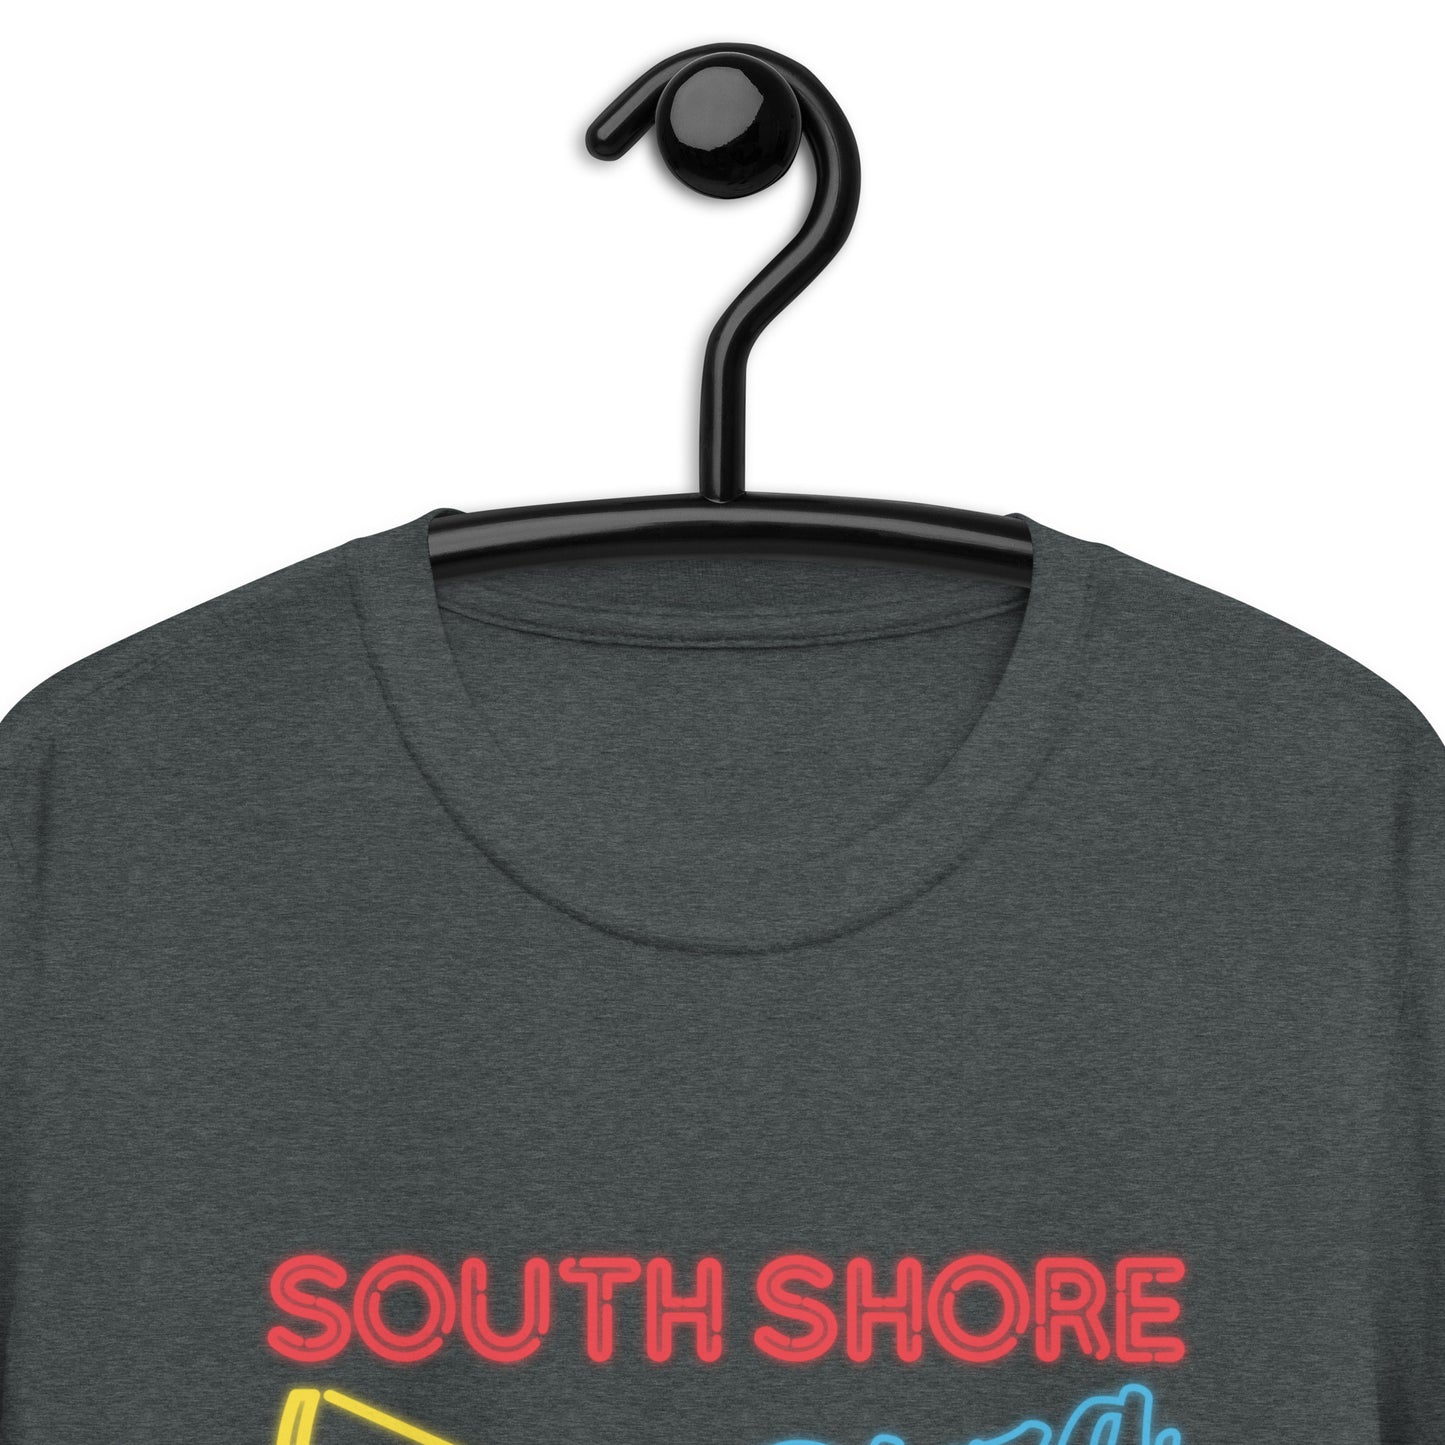 SSBP South Shore Bar Pizza Social Club Neon Sign Tee